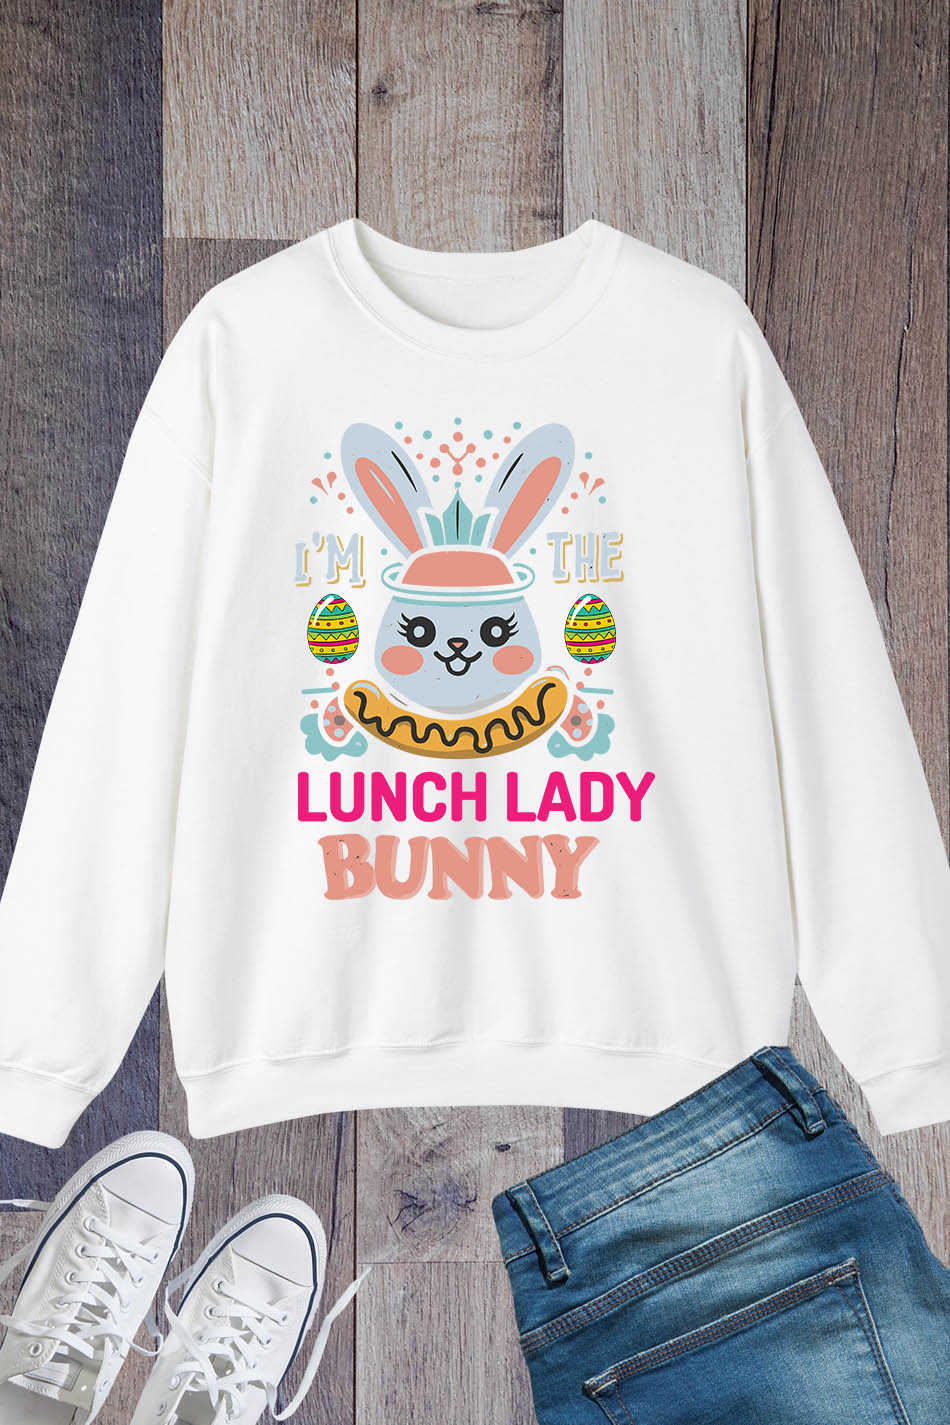 Lunch Lady Easter Sweatshirt